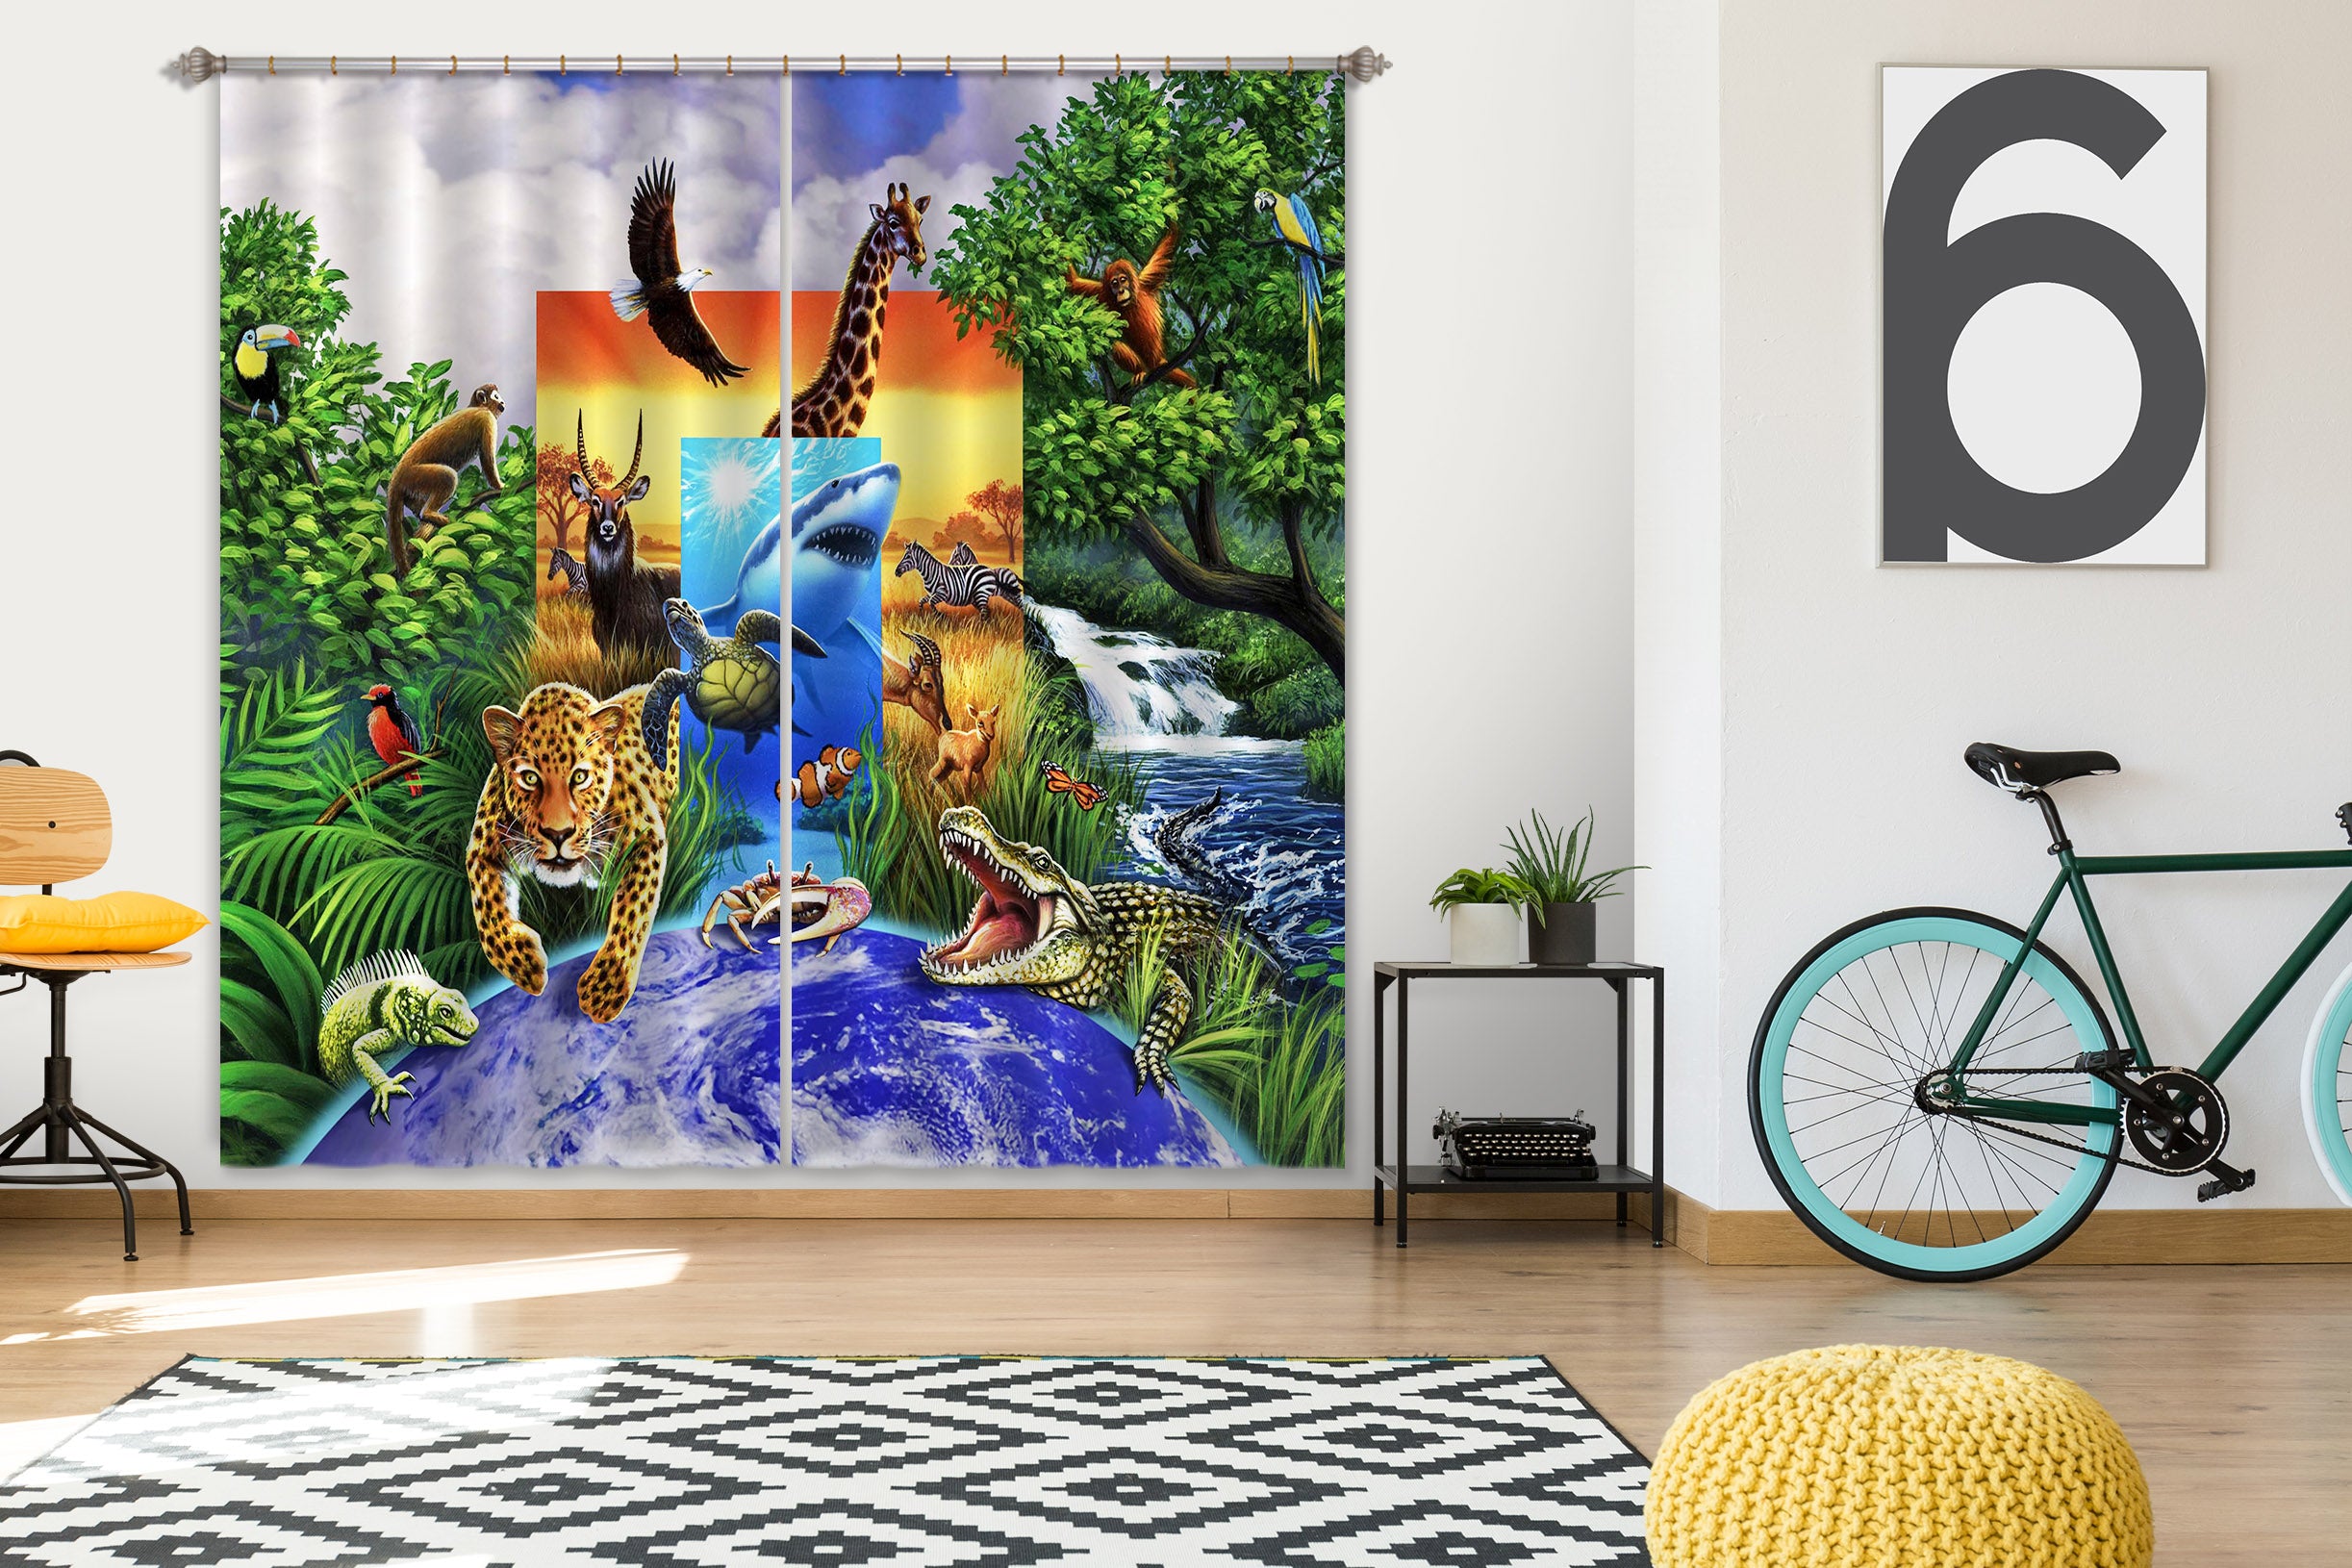 3D Wild World 86104 Jerry LoFaro Curtain Curtains Drapes